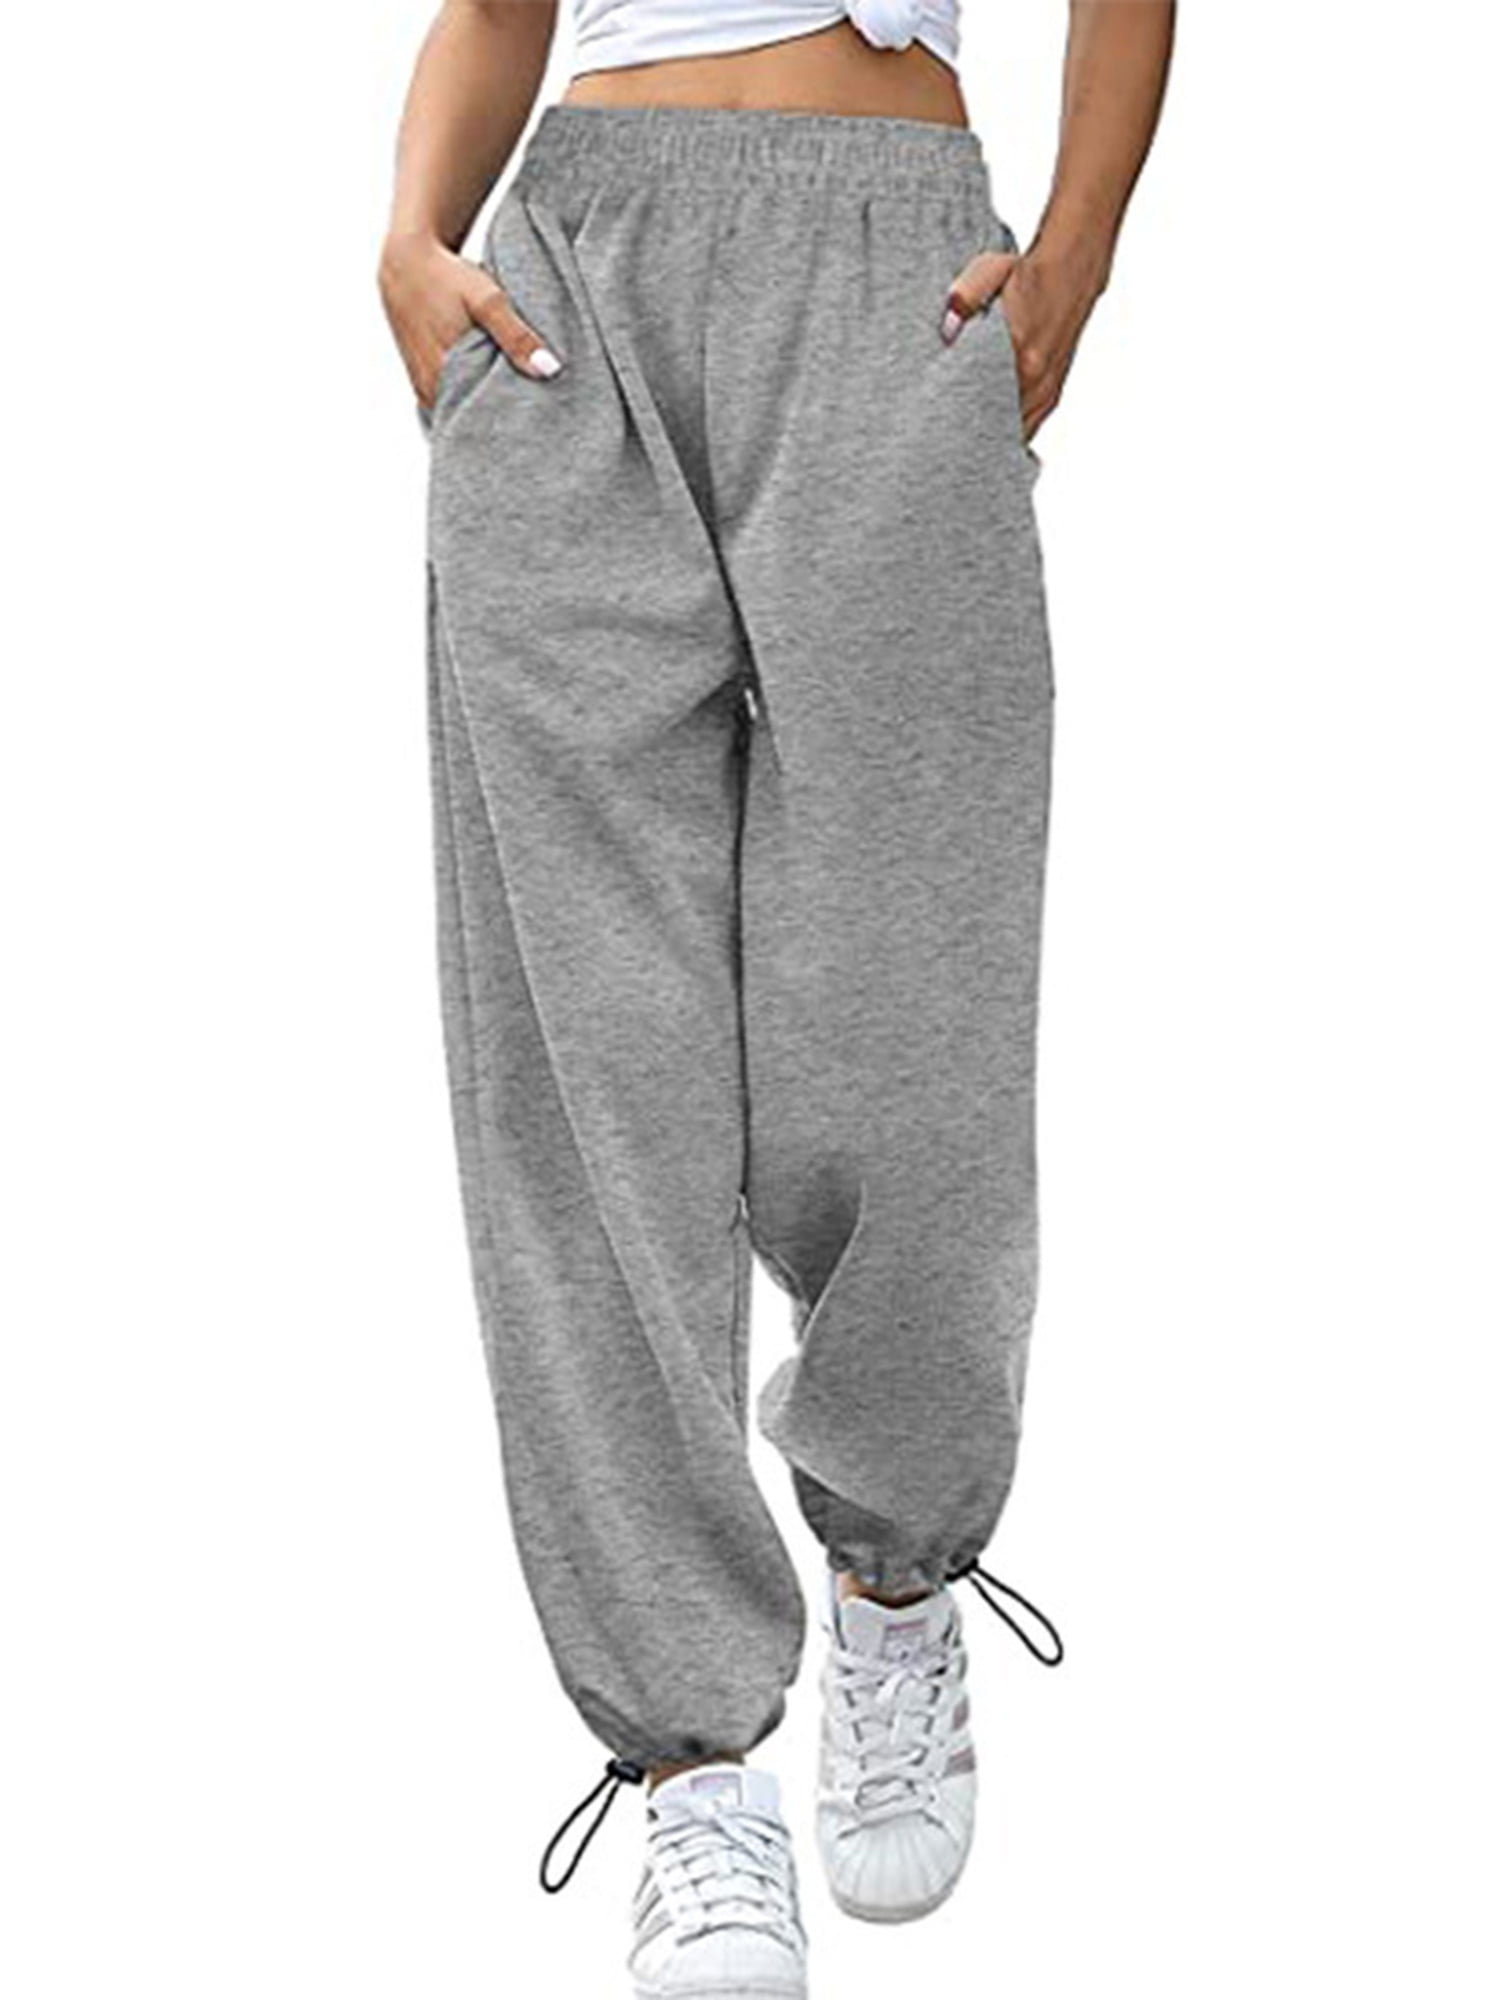 Ewedoos Fleece Lined Pants Women - Fleece Lined Sweatpants Women with  Pockets High Waisted Thermal Joggers Winter Pants